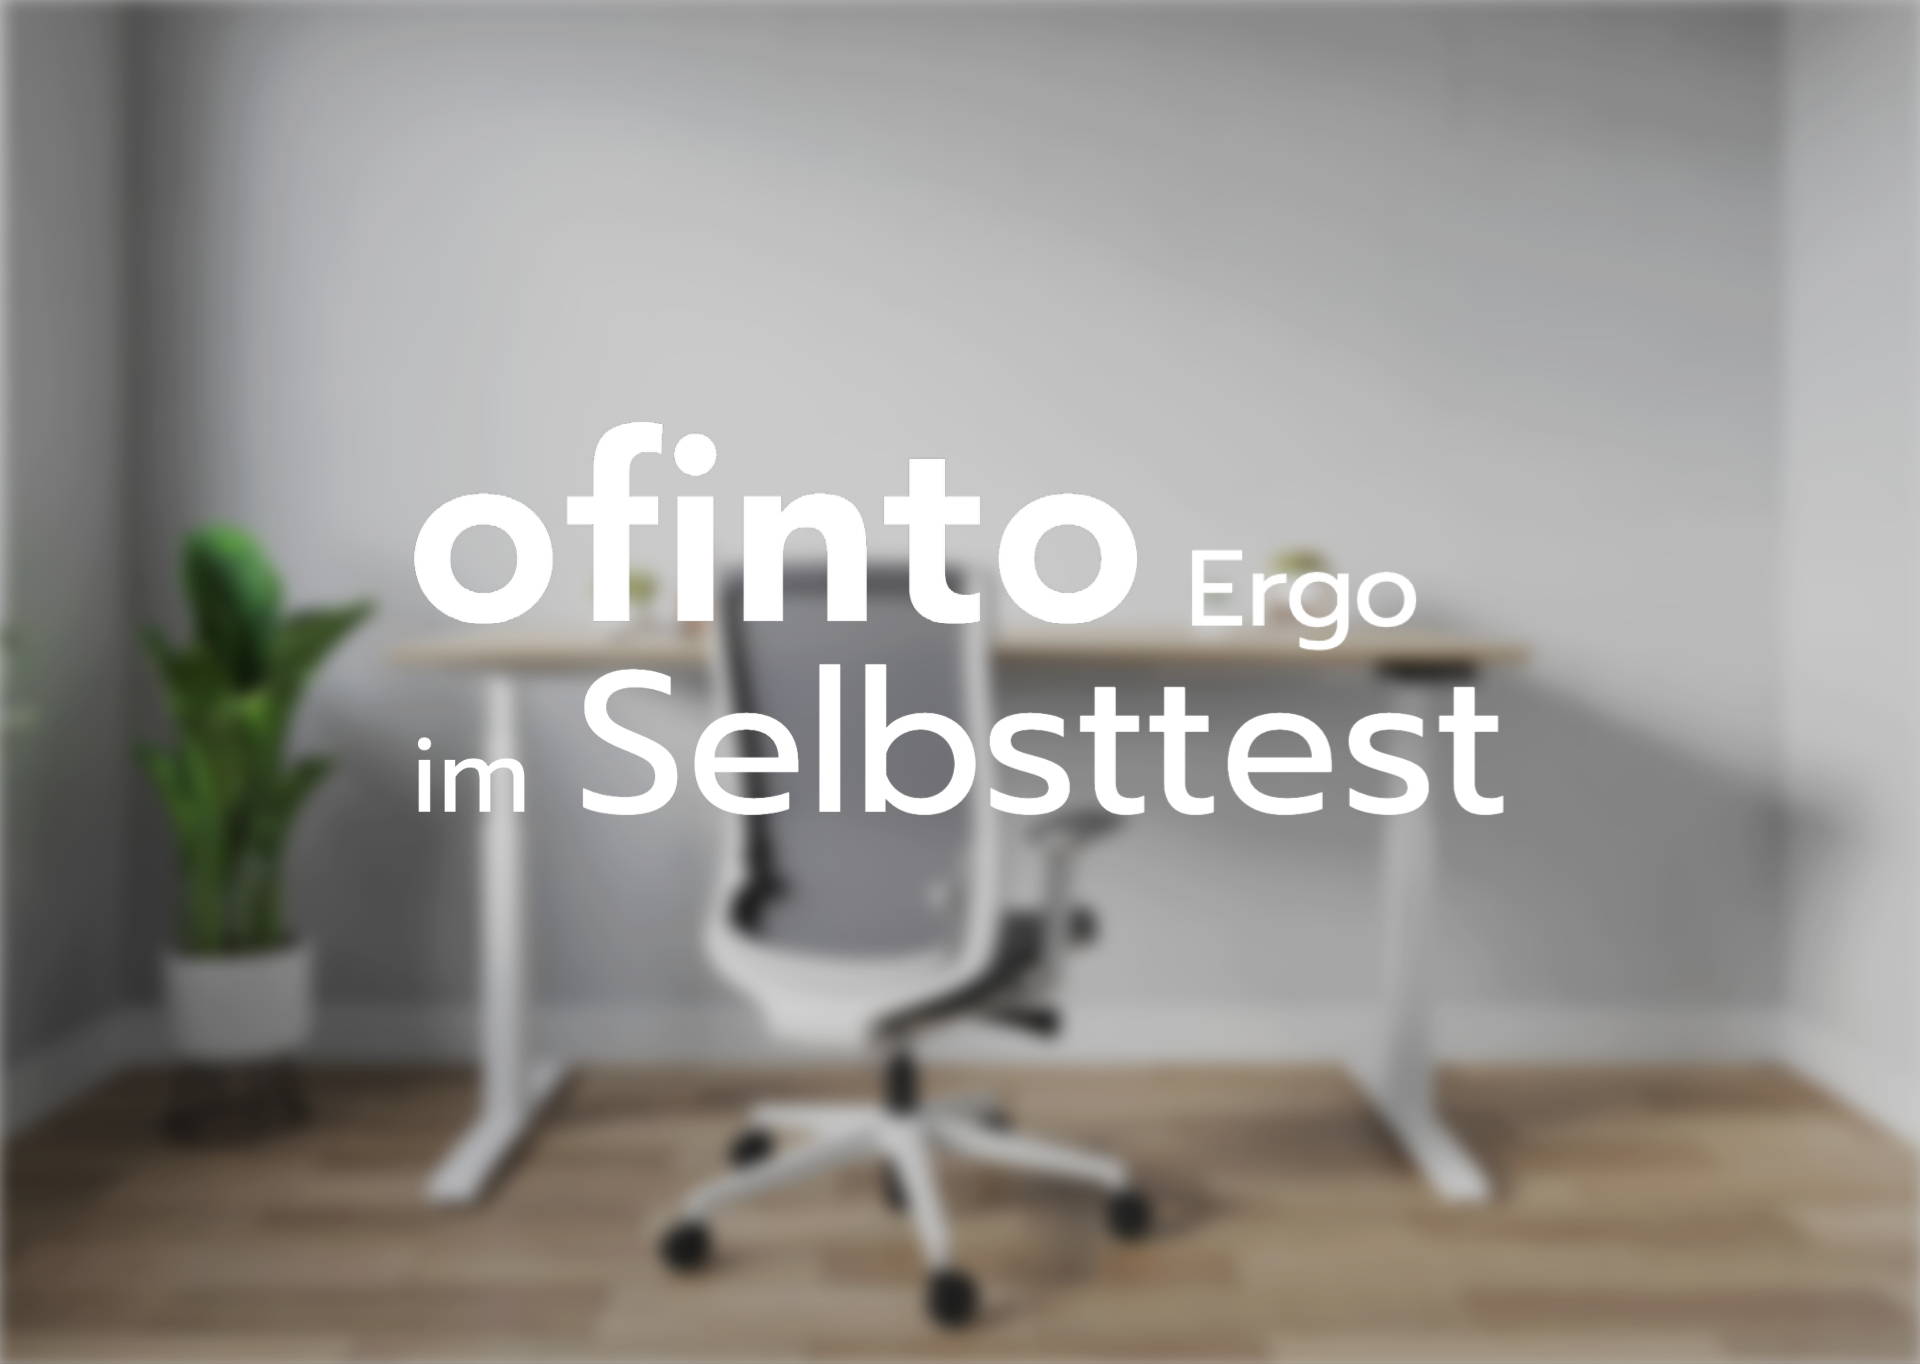 The ofinto Ergo in the Kassensturz office chair self-test